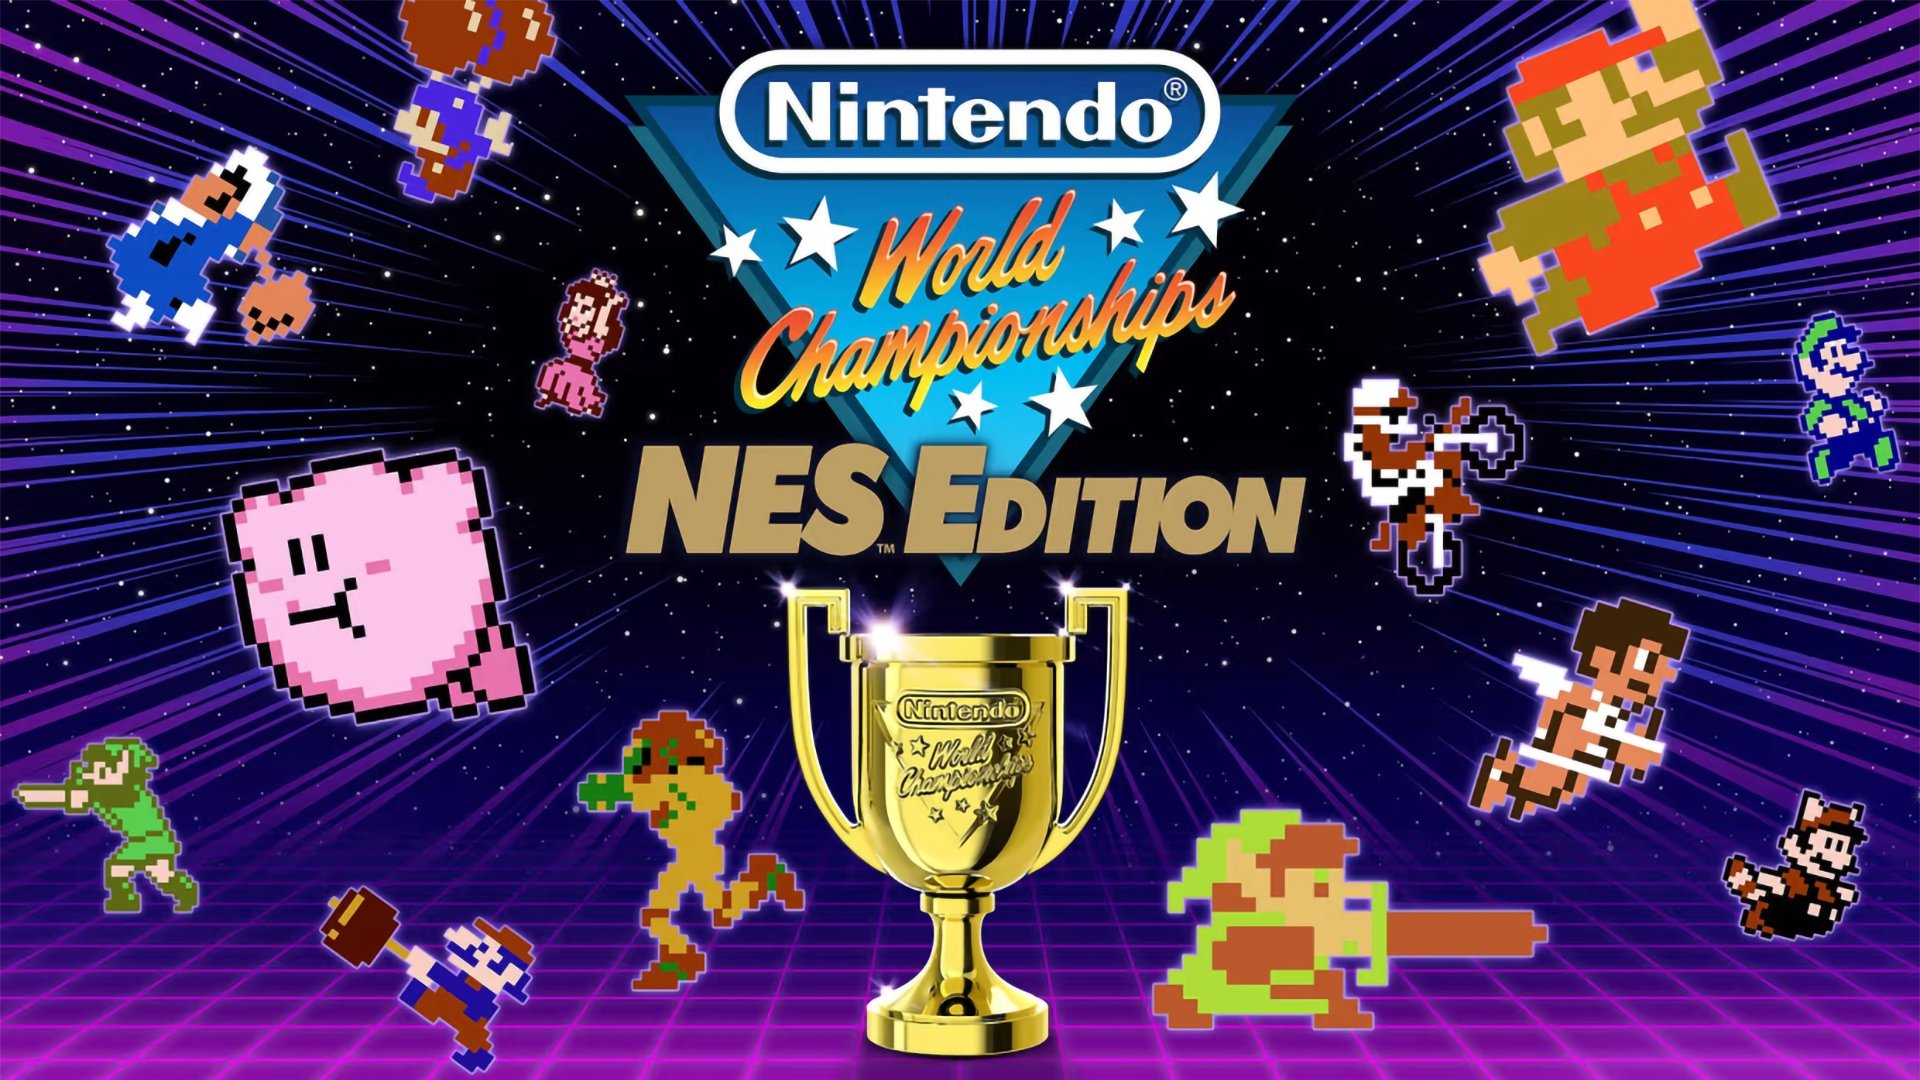 Nintendo’s NES World Championships game feels like its next multiplayer hit